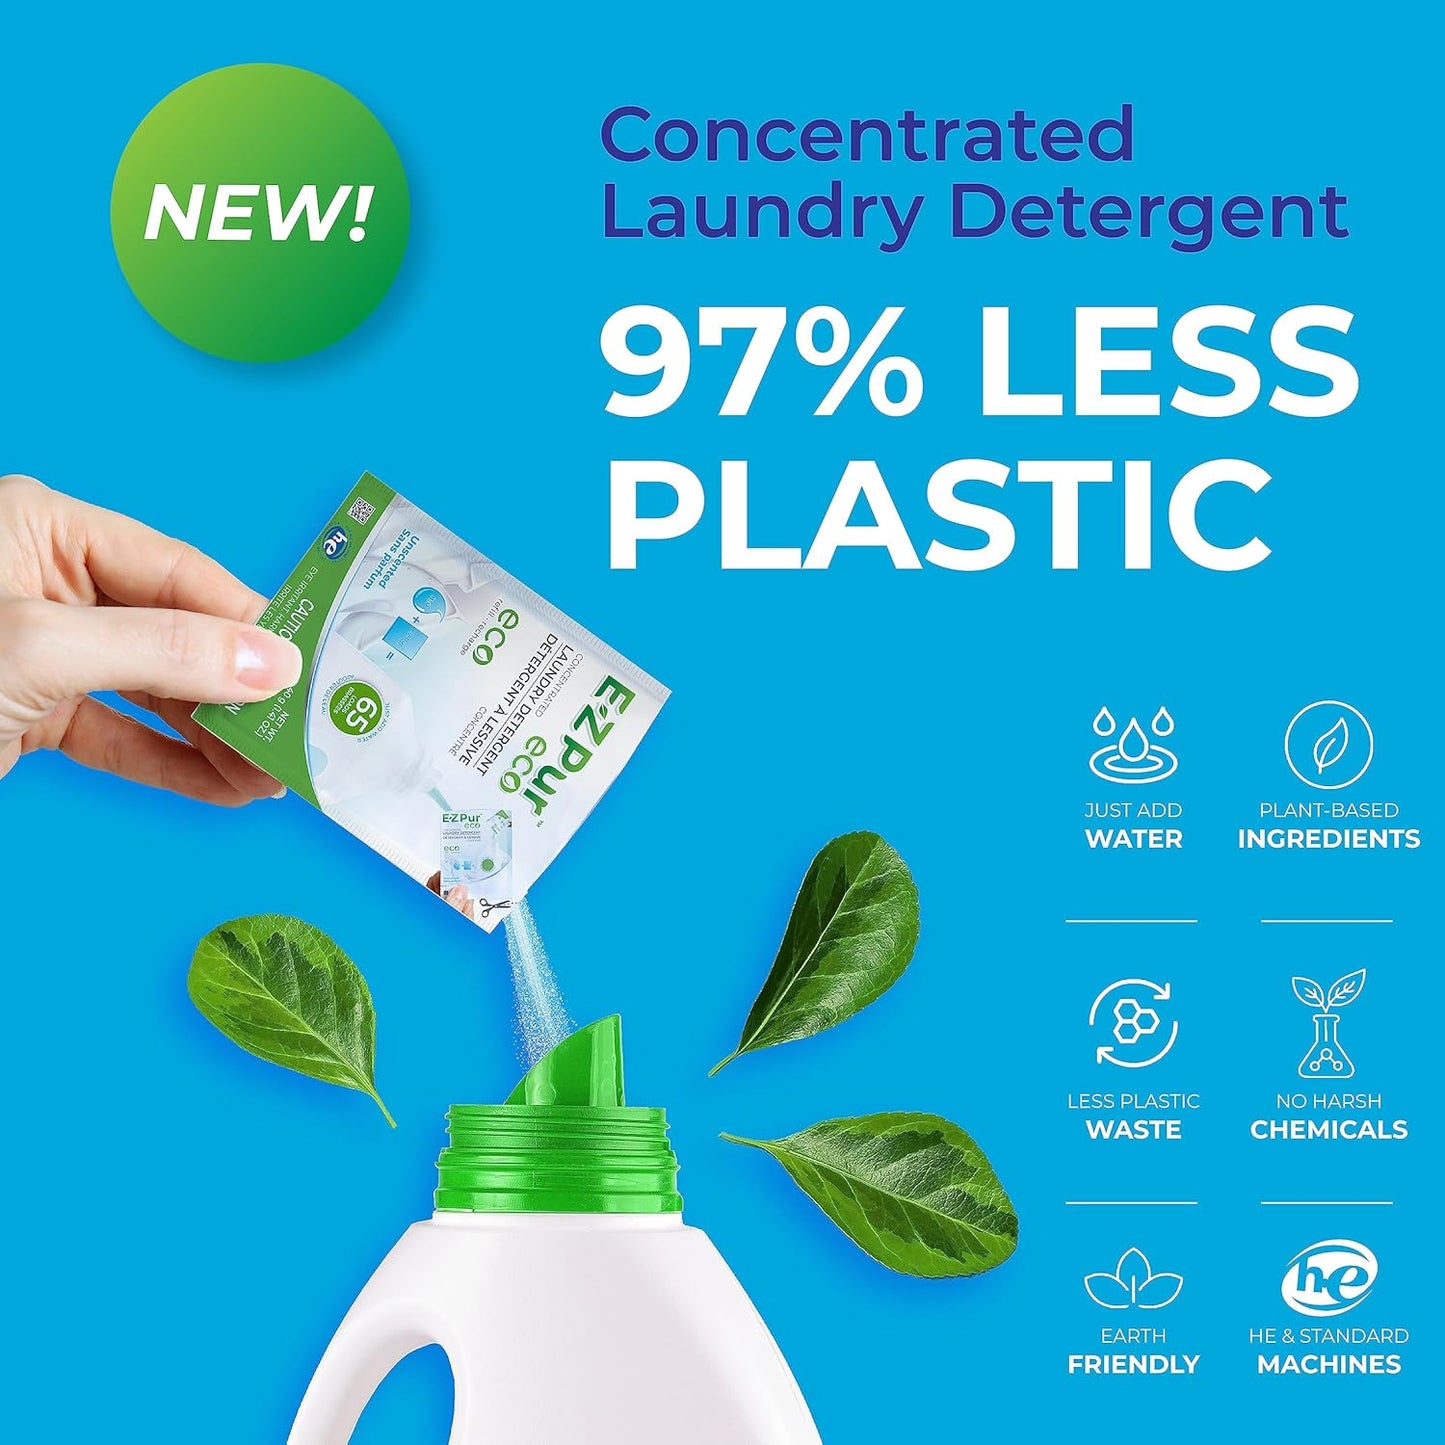 520 Loads - EZ Pur Eco Laundry Detergent Refill (Unscented)